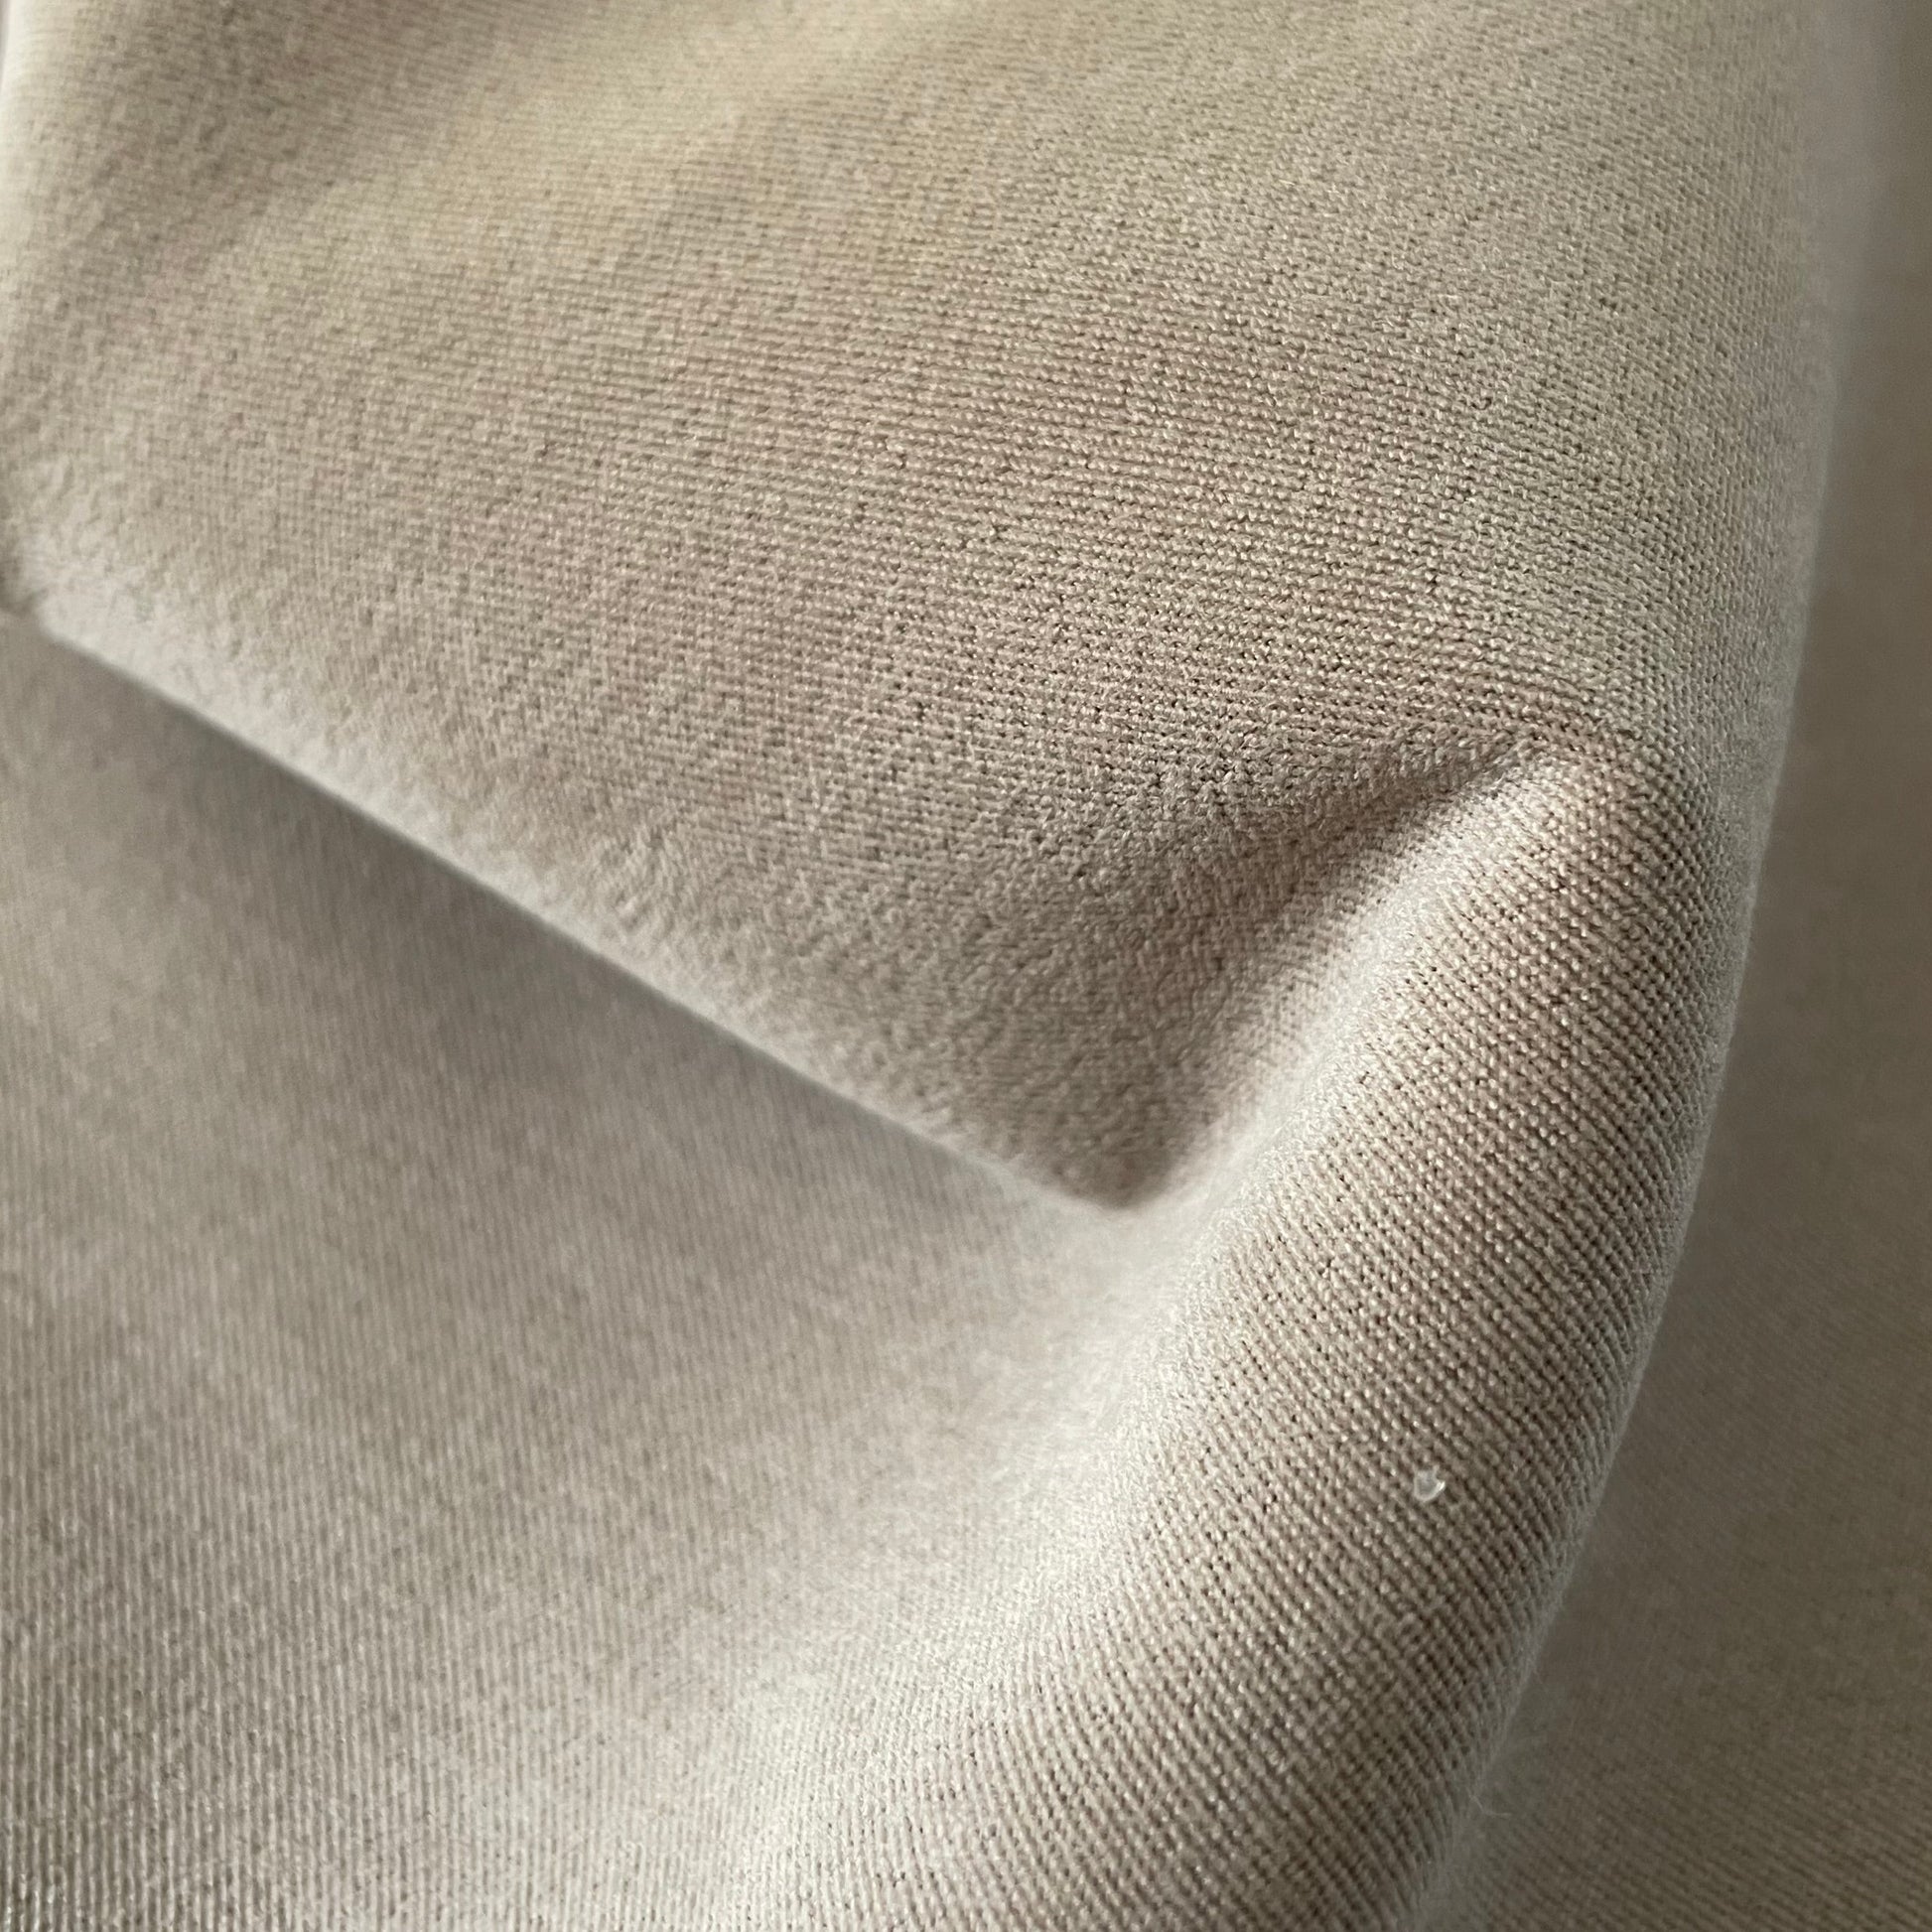 Camel #U98 Moleskin Spandex Woven Fabric - SKU 4611A